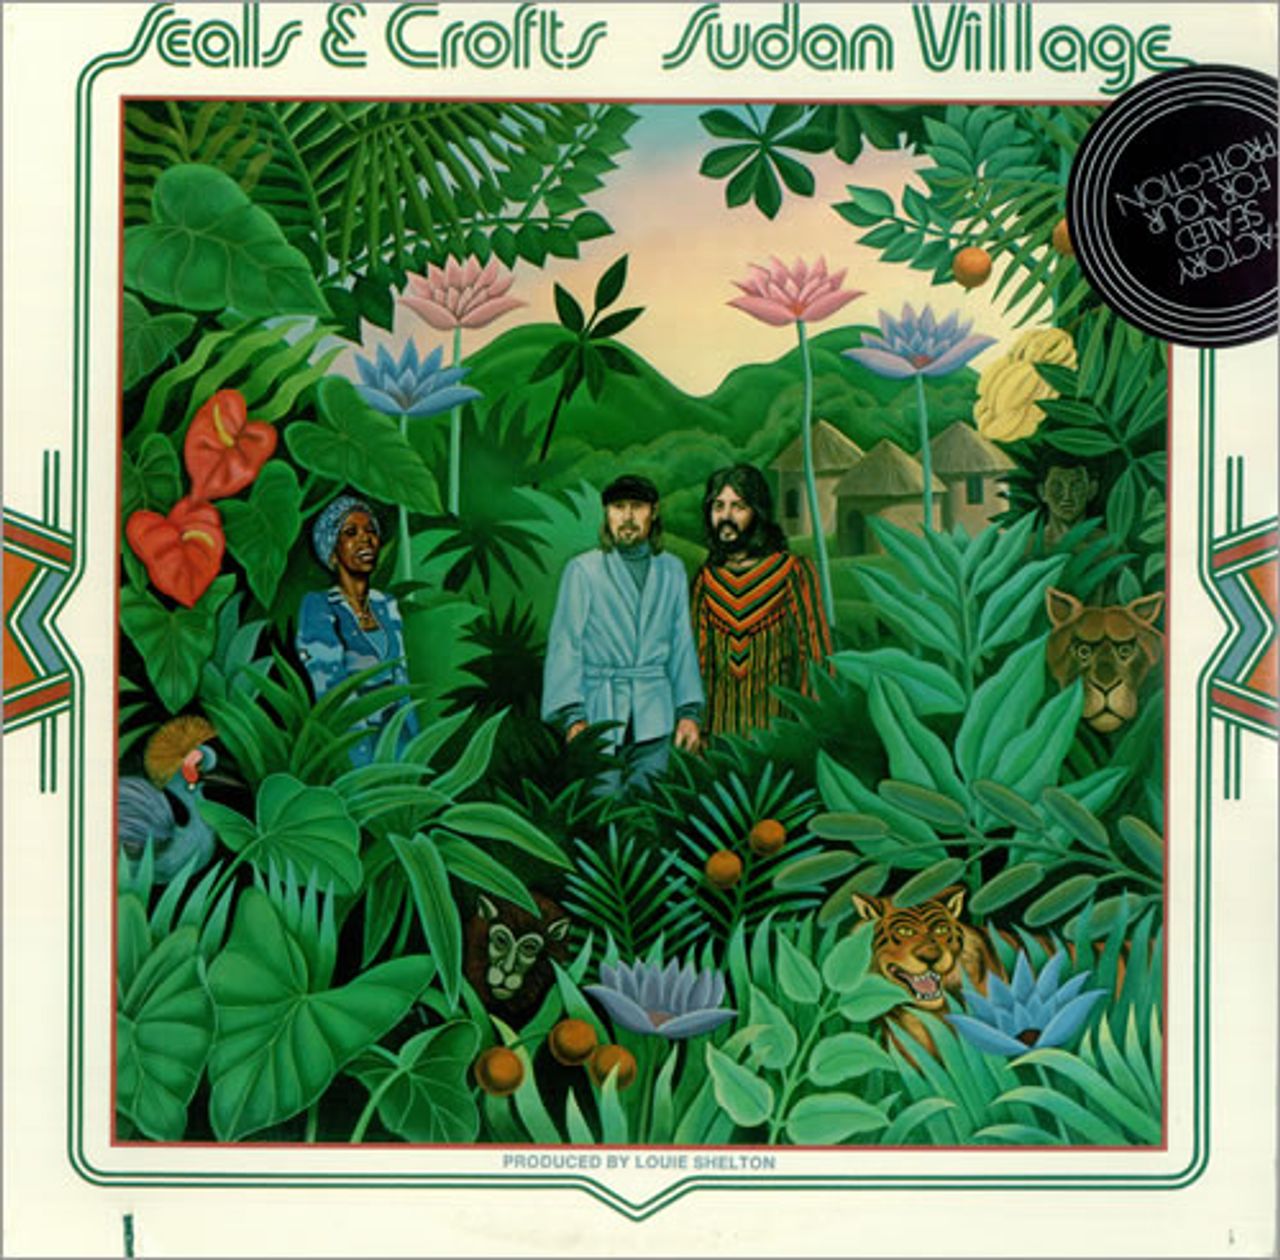 Seals & Crofts Sudan Village - Sealed US vinyl LP album (LP record) BS2976